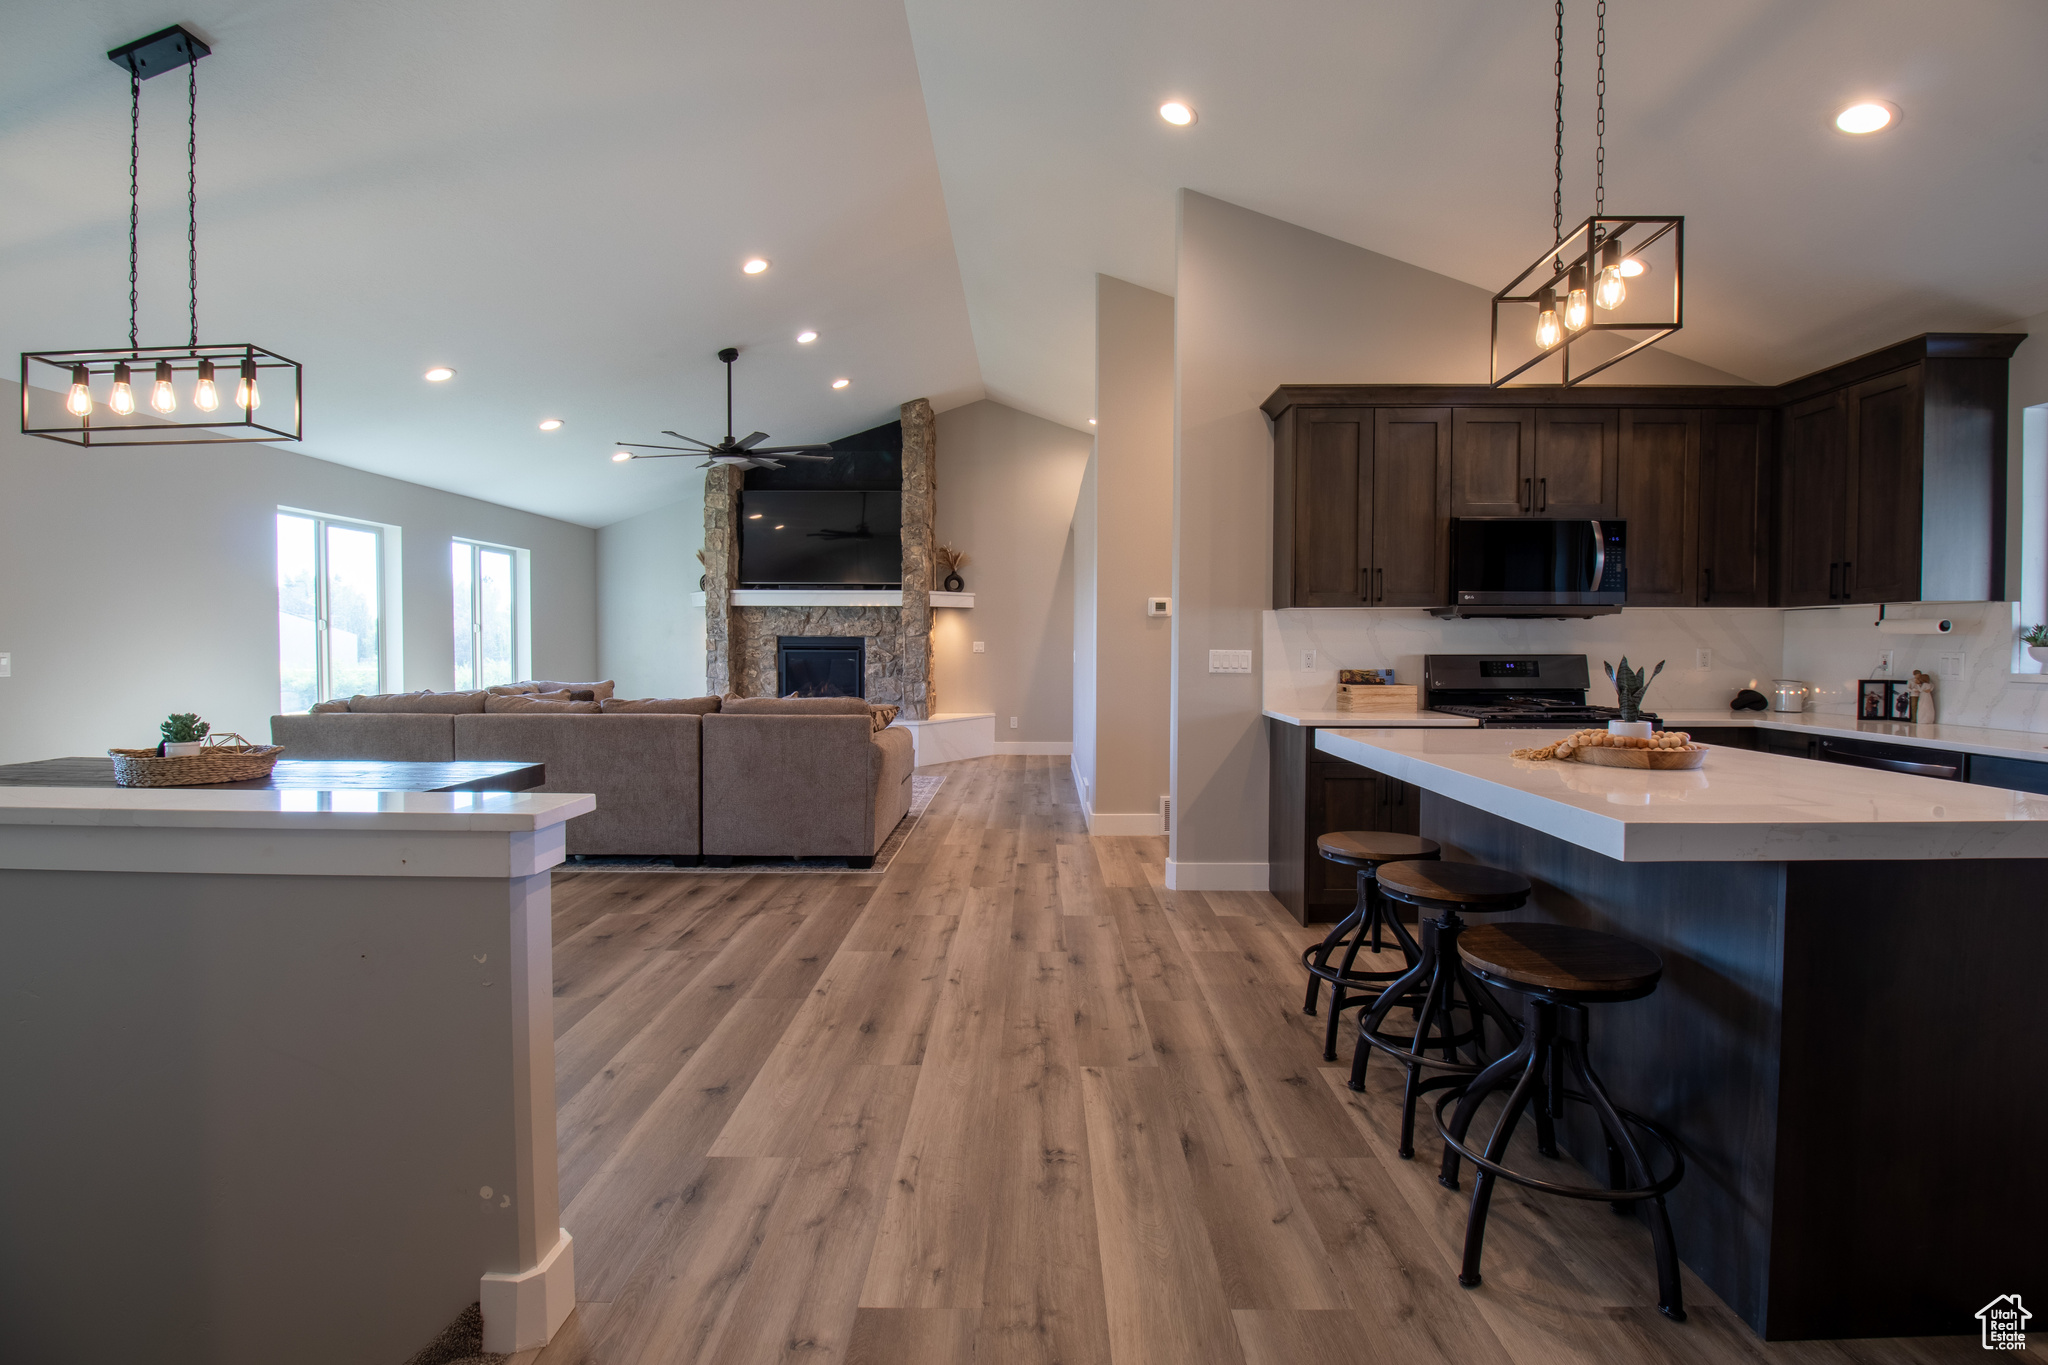 Kitchen featuring a fireplace, backsplash, light hardwood / wood-style floors, range, and vaulted ceiling